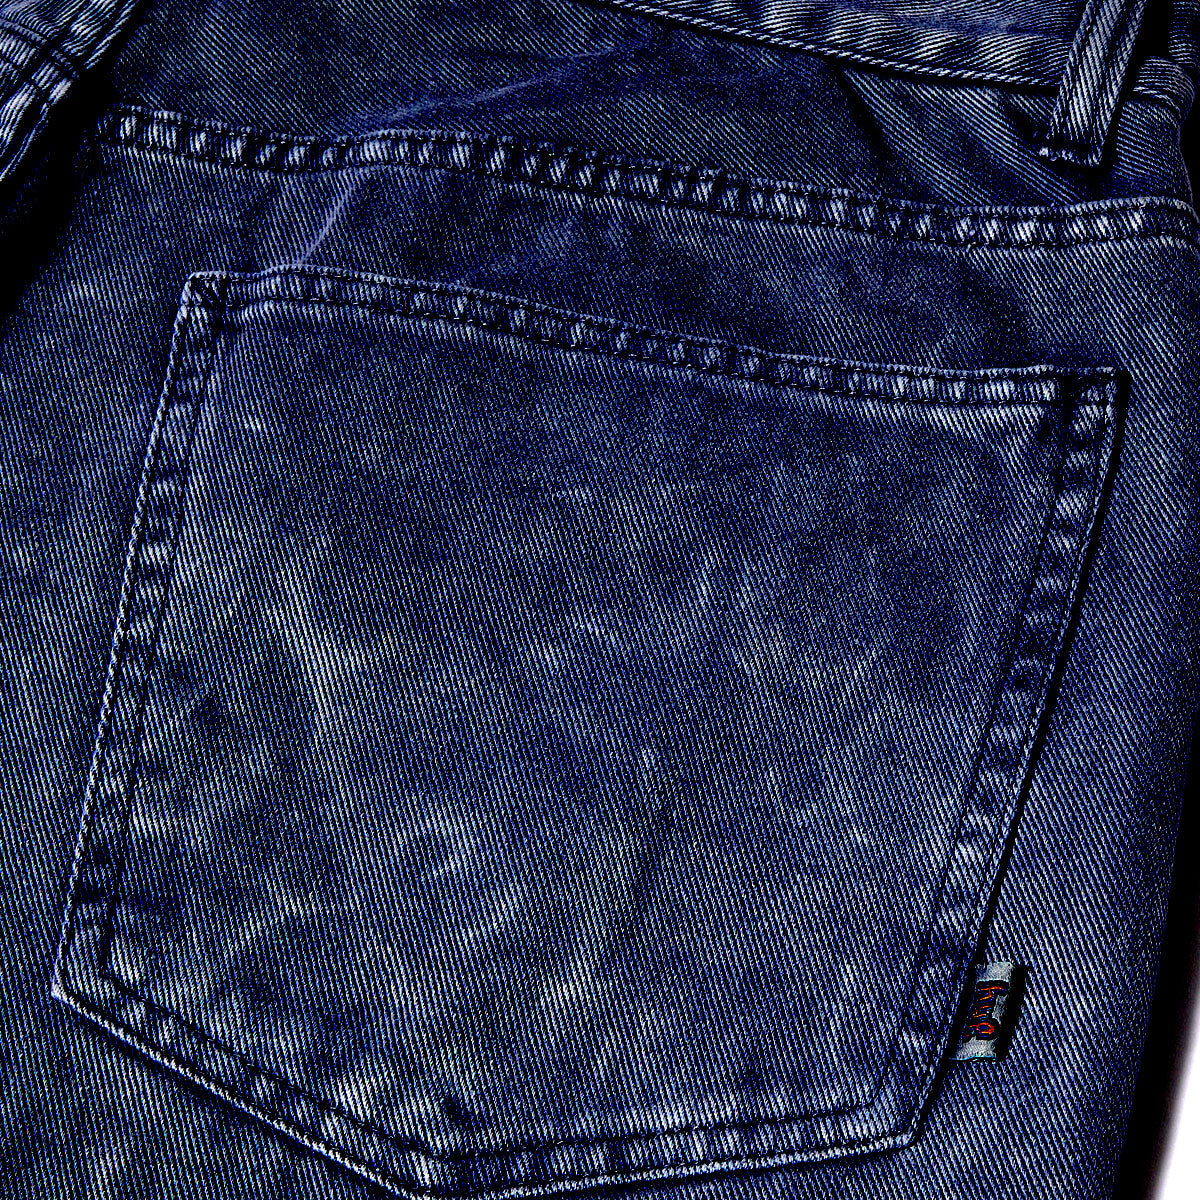 HUF Cromer Washed Pants - Dust Purple image 5